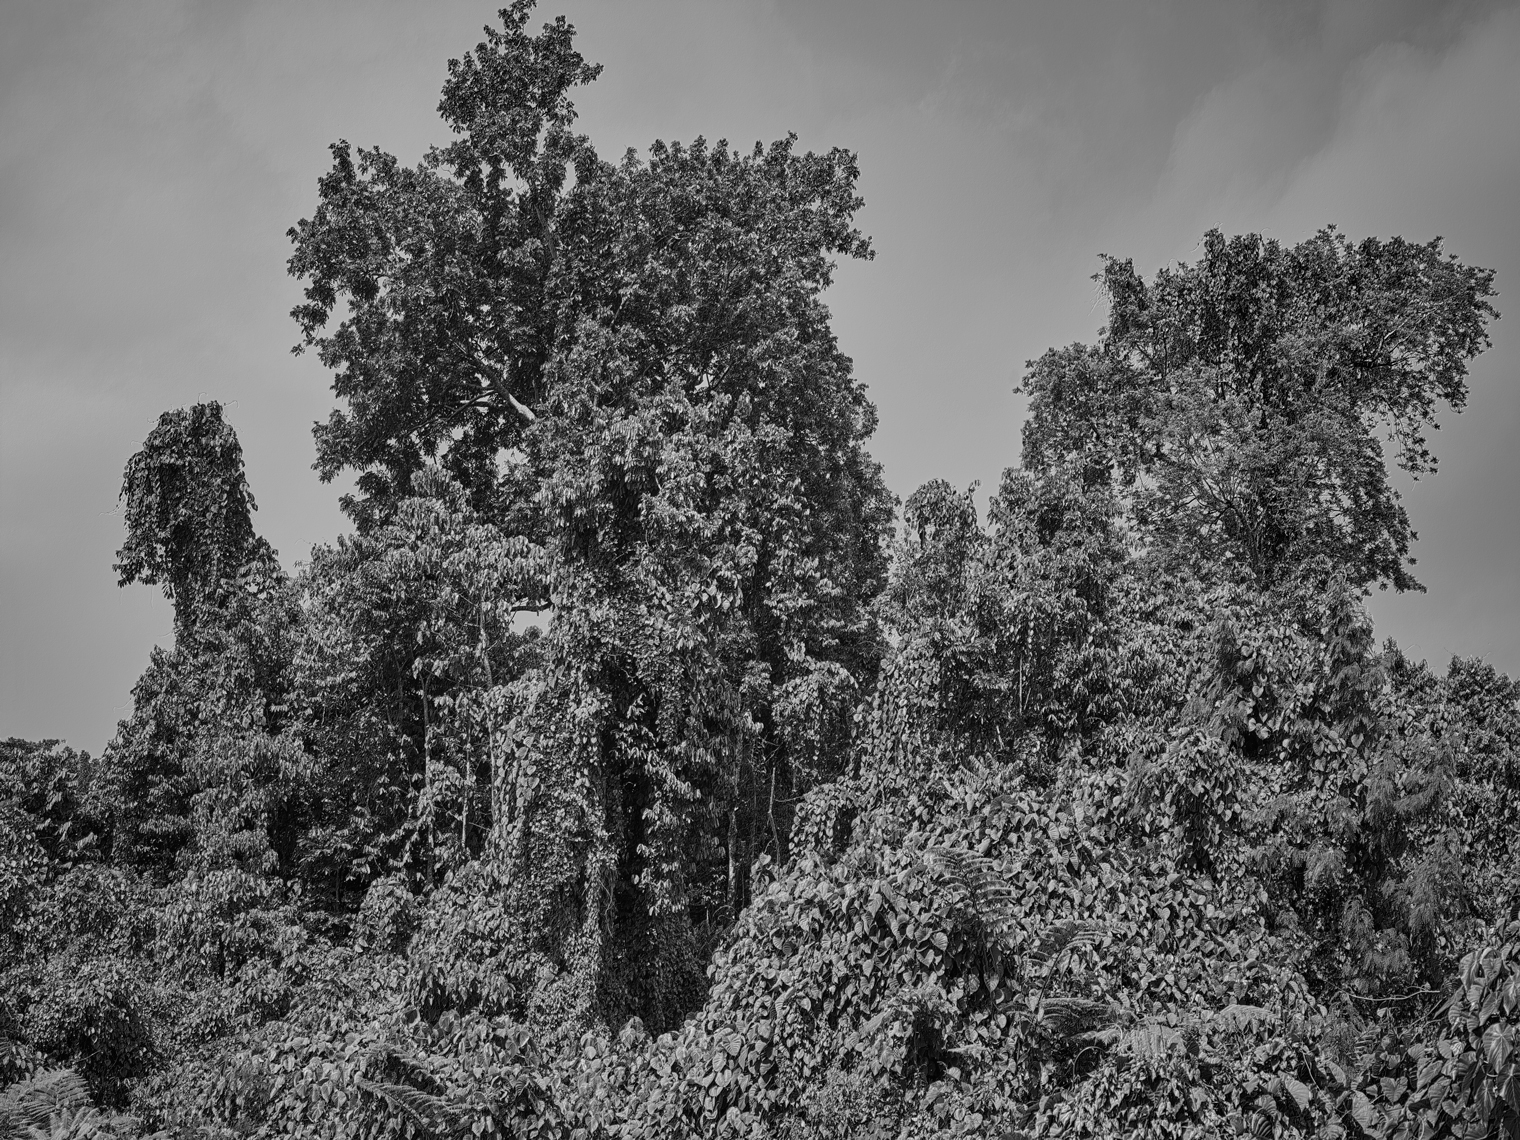 Jon Wyatt Photography - Fault Line V - A tsunami of vegetation - invasive vines in samoa